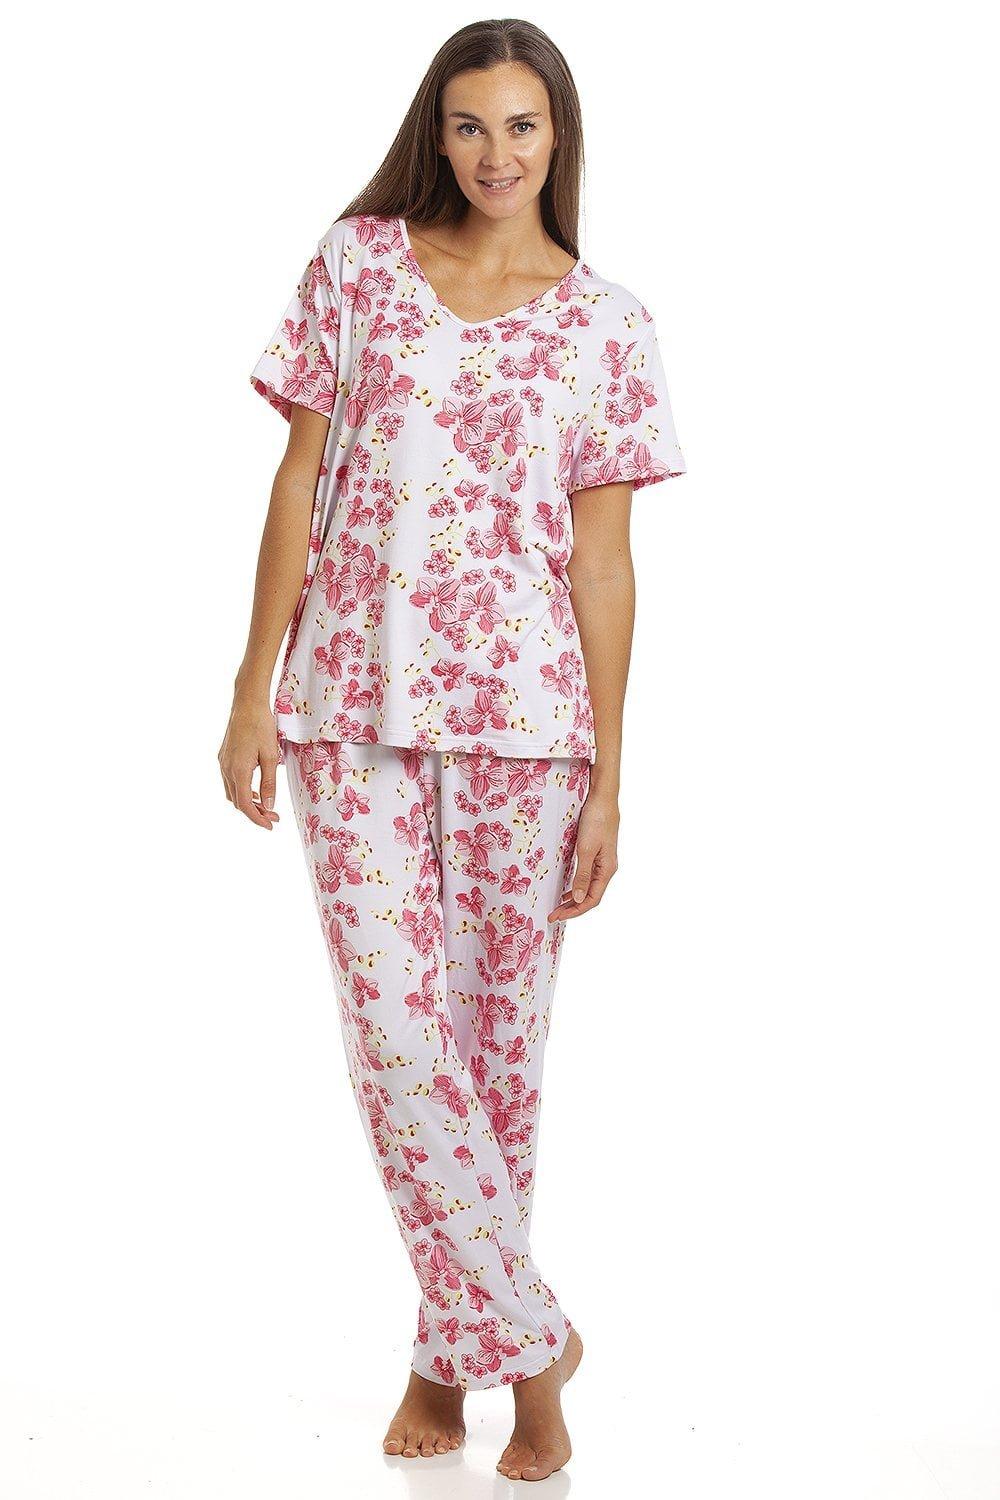 Spandex Full Length Pyjama Set